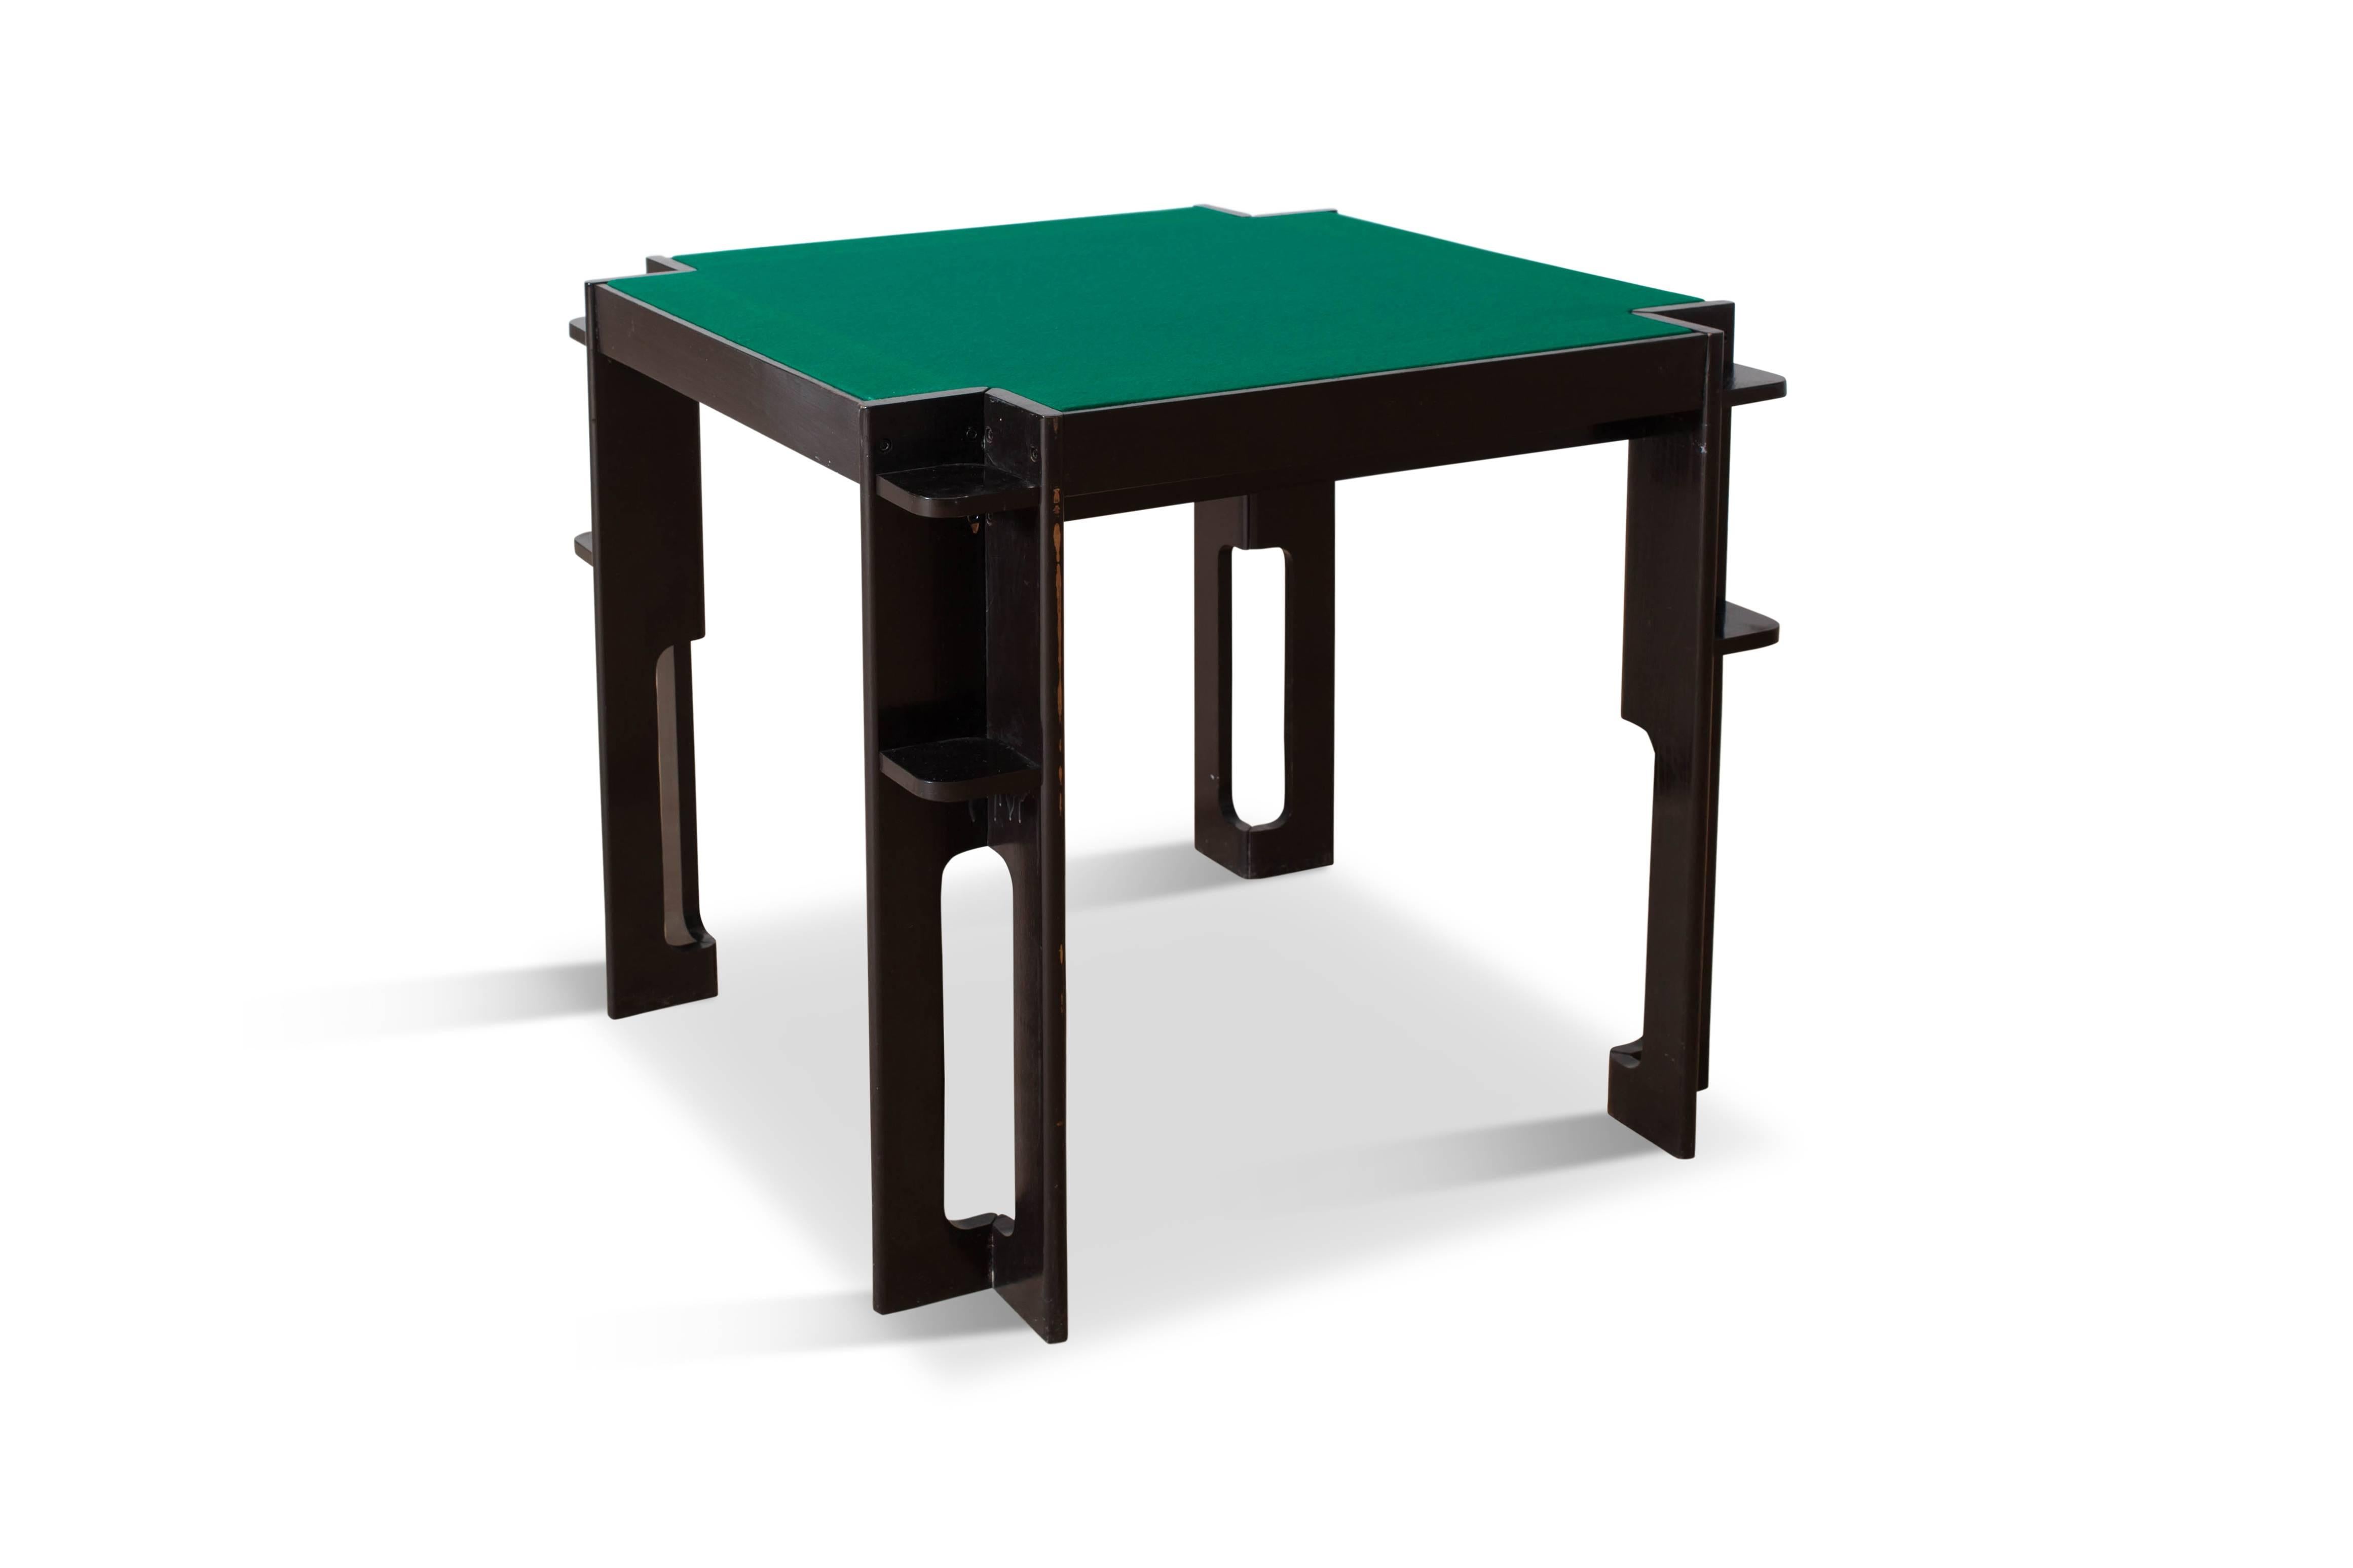 Art Deco Italian Modernism Square Gaming Table, 1930s